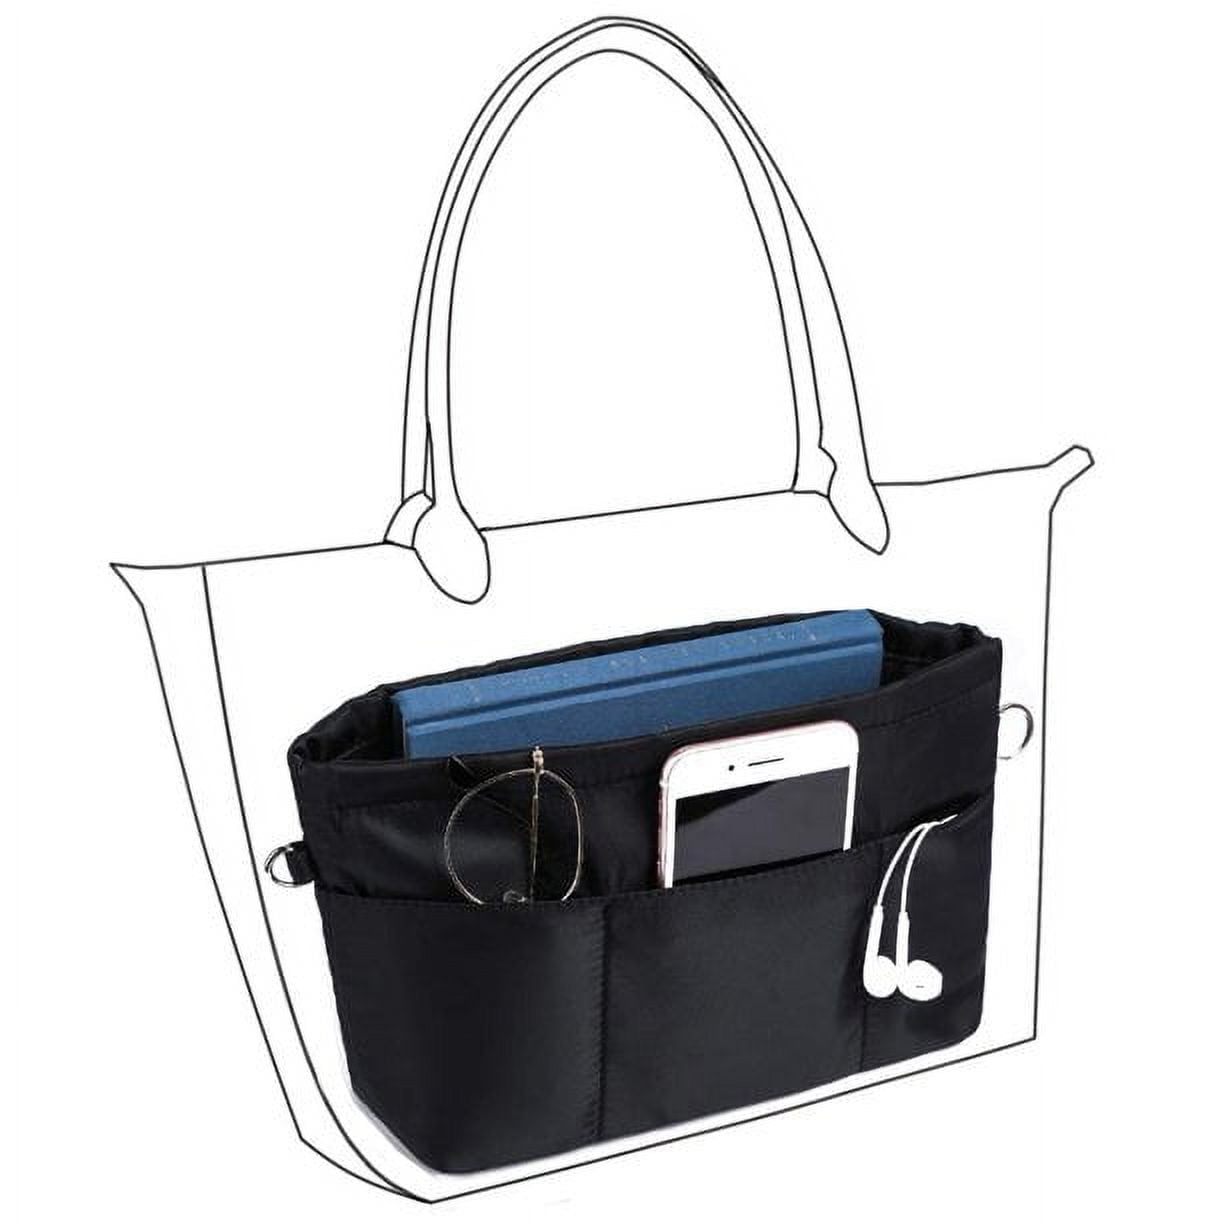 Purse Organizer Insert with Zipped Top for Tote Bag Handbag Shaper with 13 Pockets Large Size 0a553b12 4c35 4f98 a1da 645404cfe6b8.65309175569b1a1dd7a672f3d03897f8